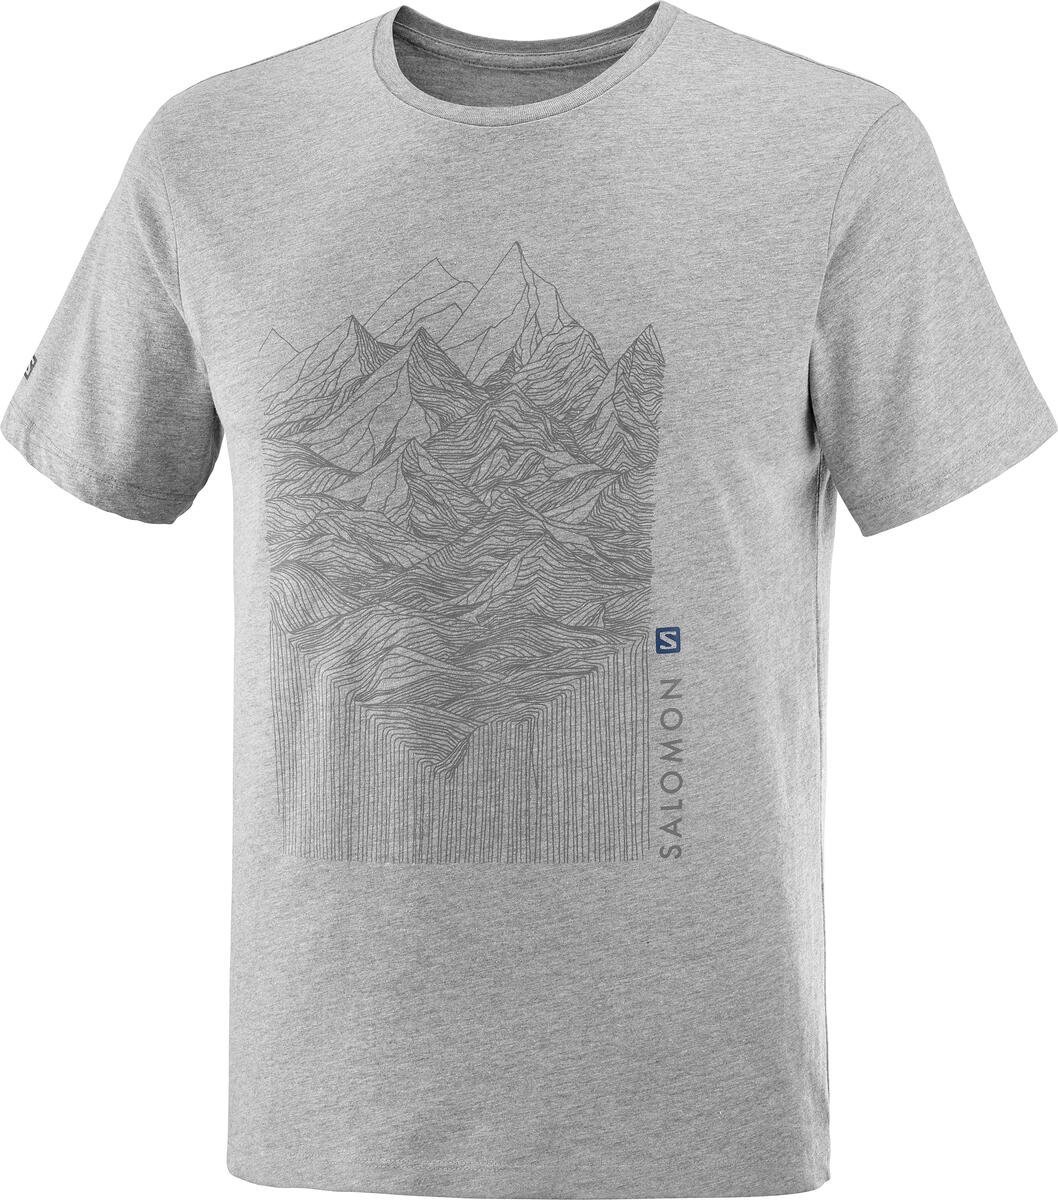 Salomon Outlife Graphic Mountain T-Shirt M